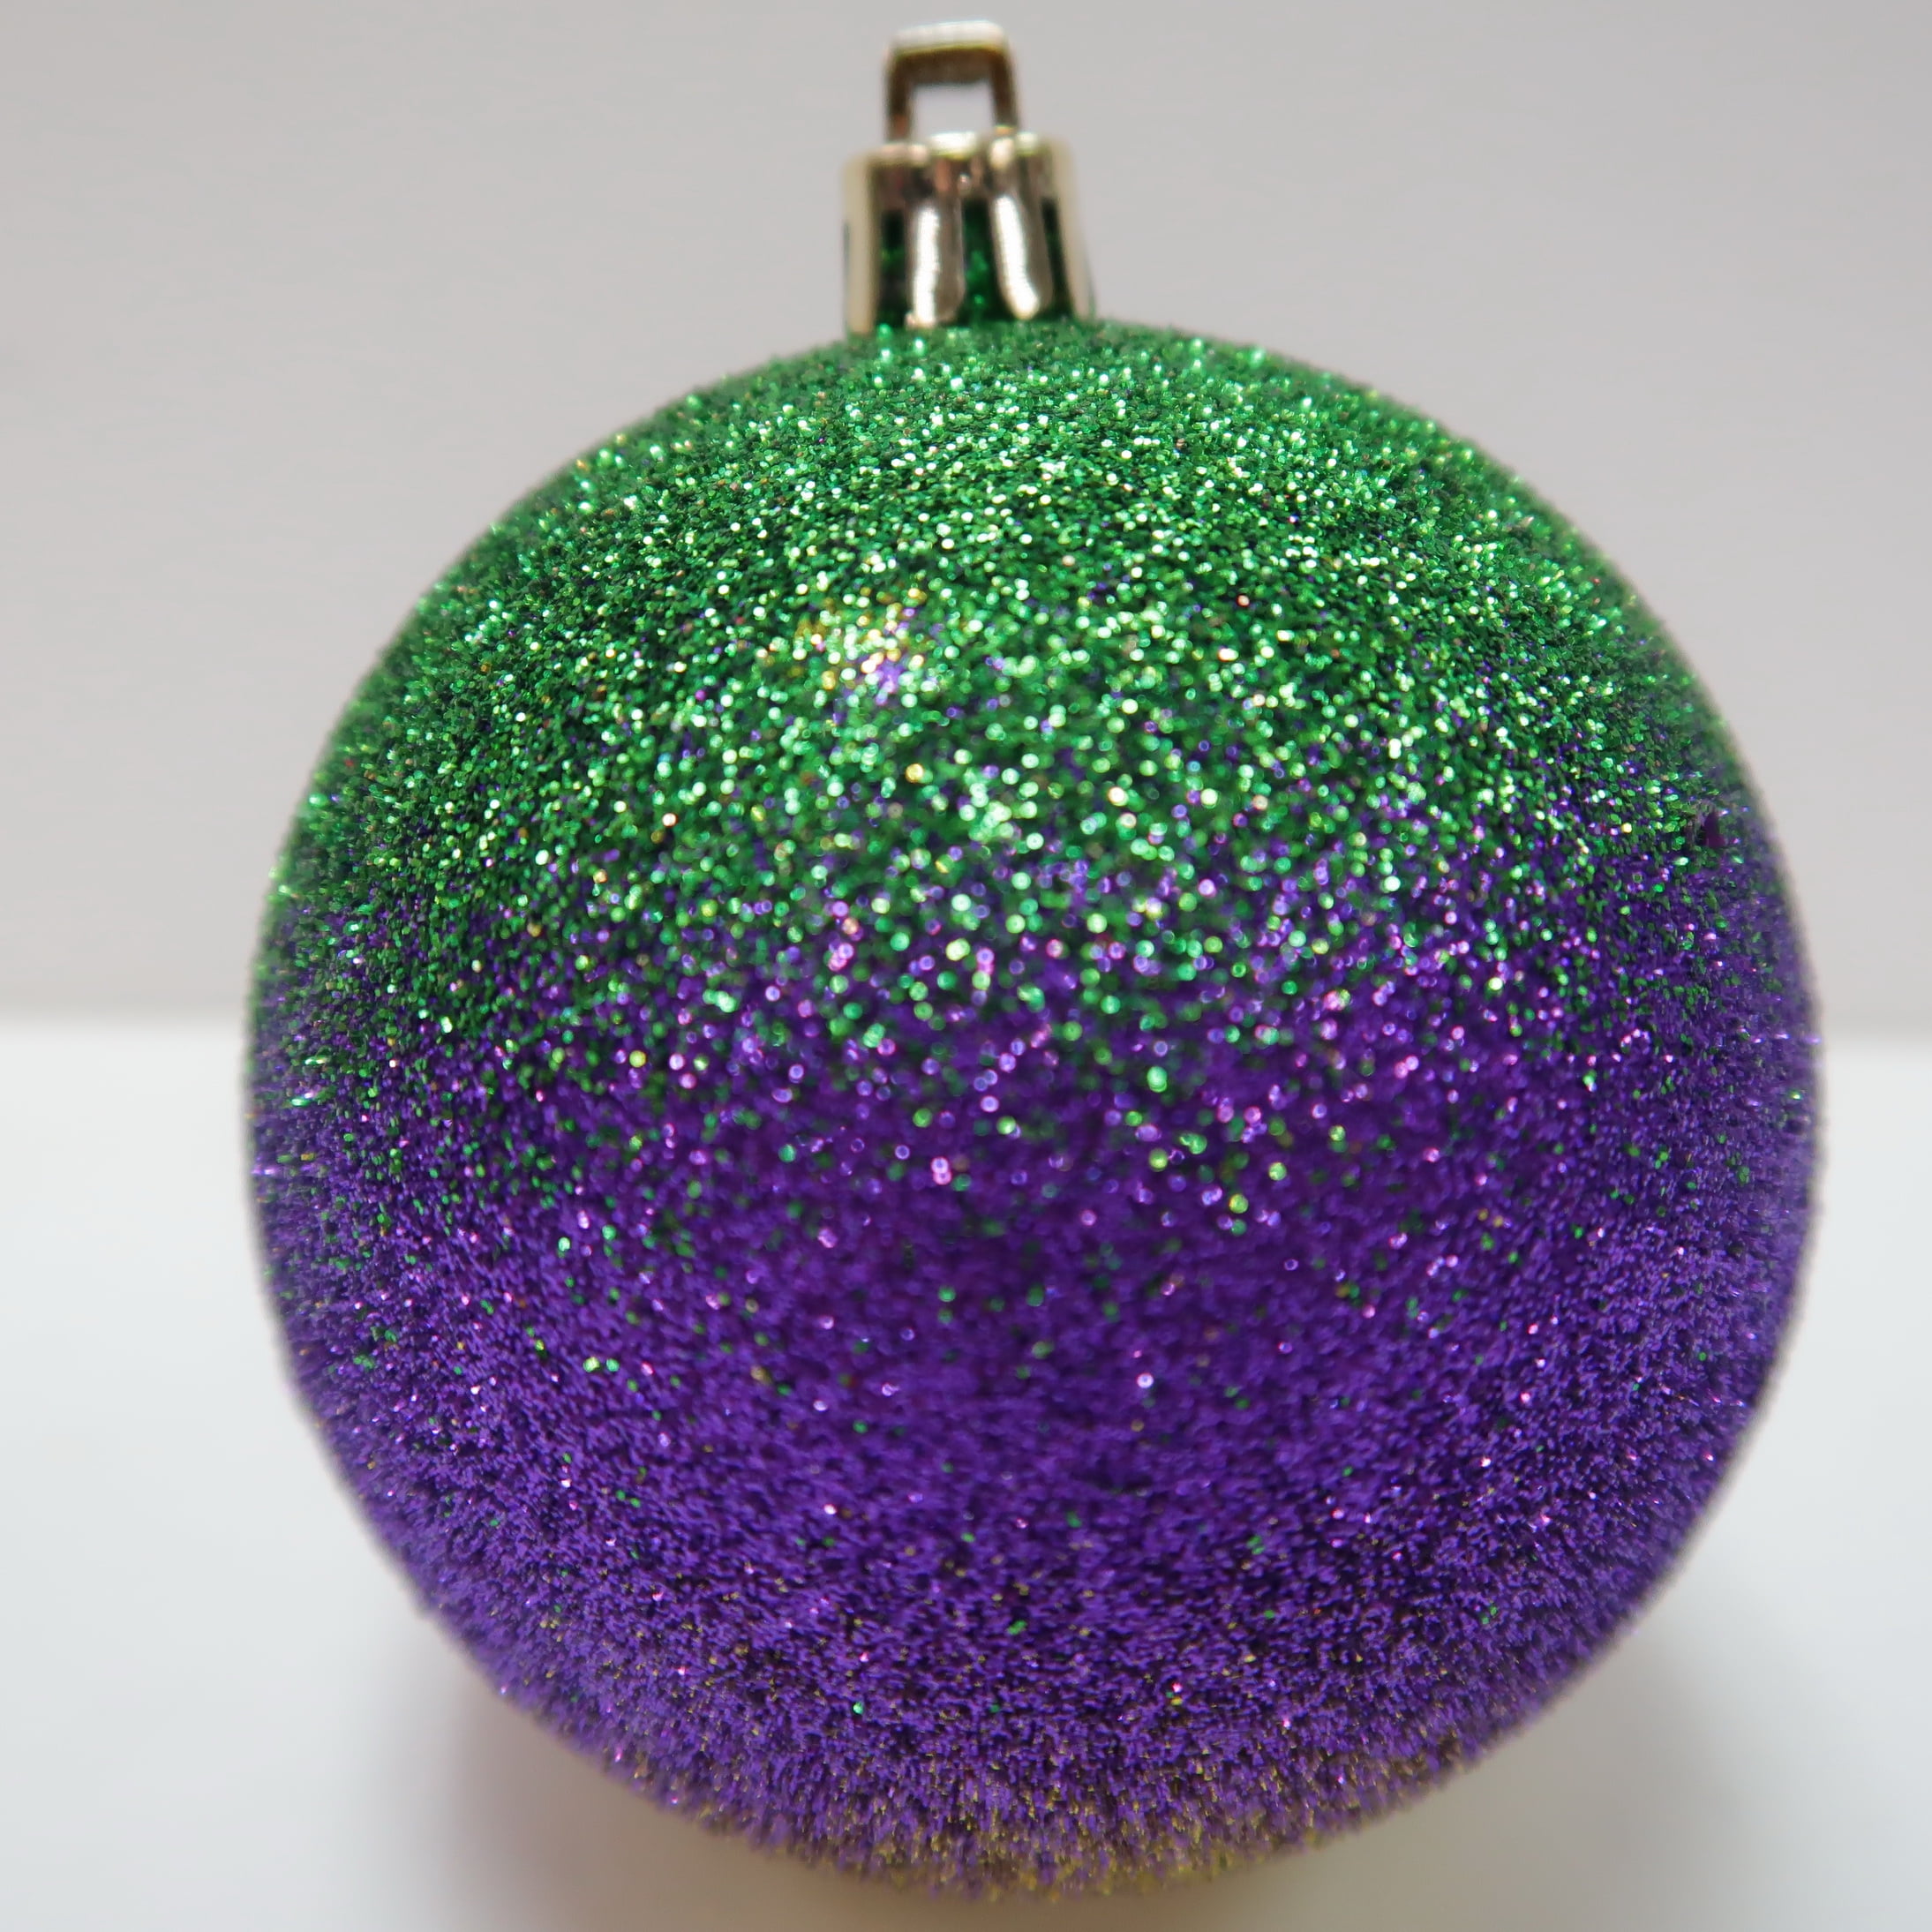 50mm Purple Green Gold Ornaments